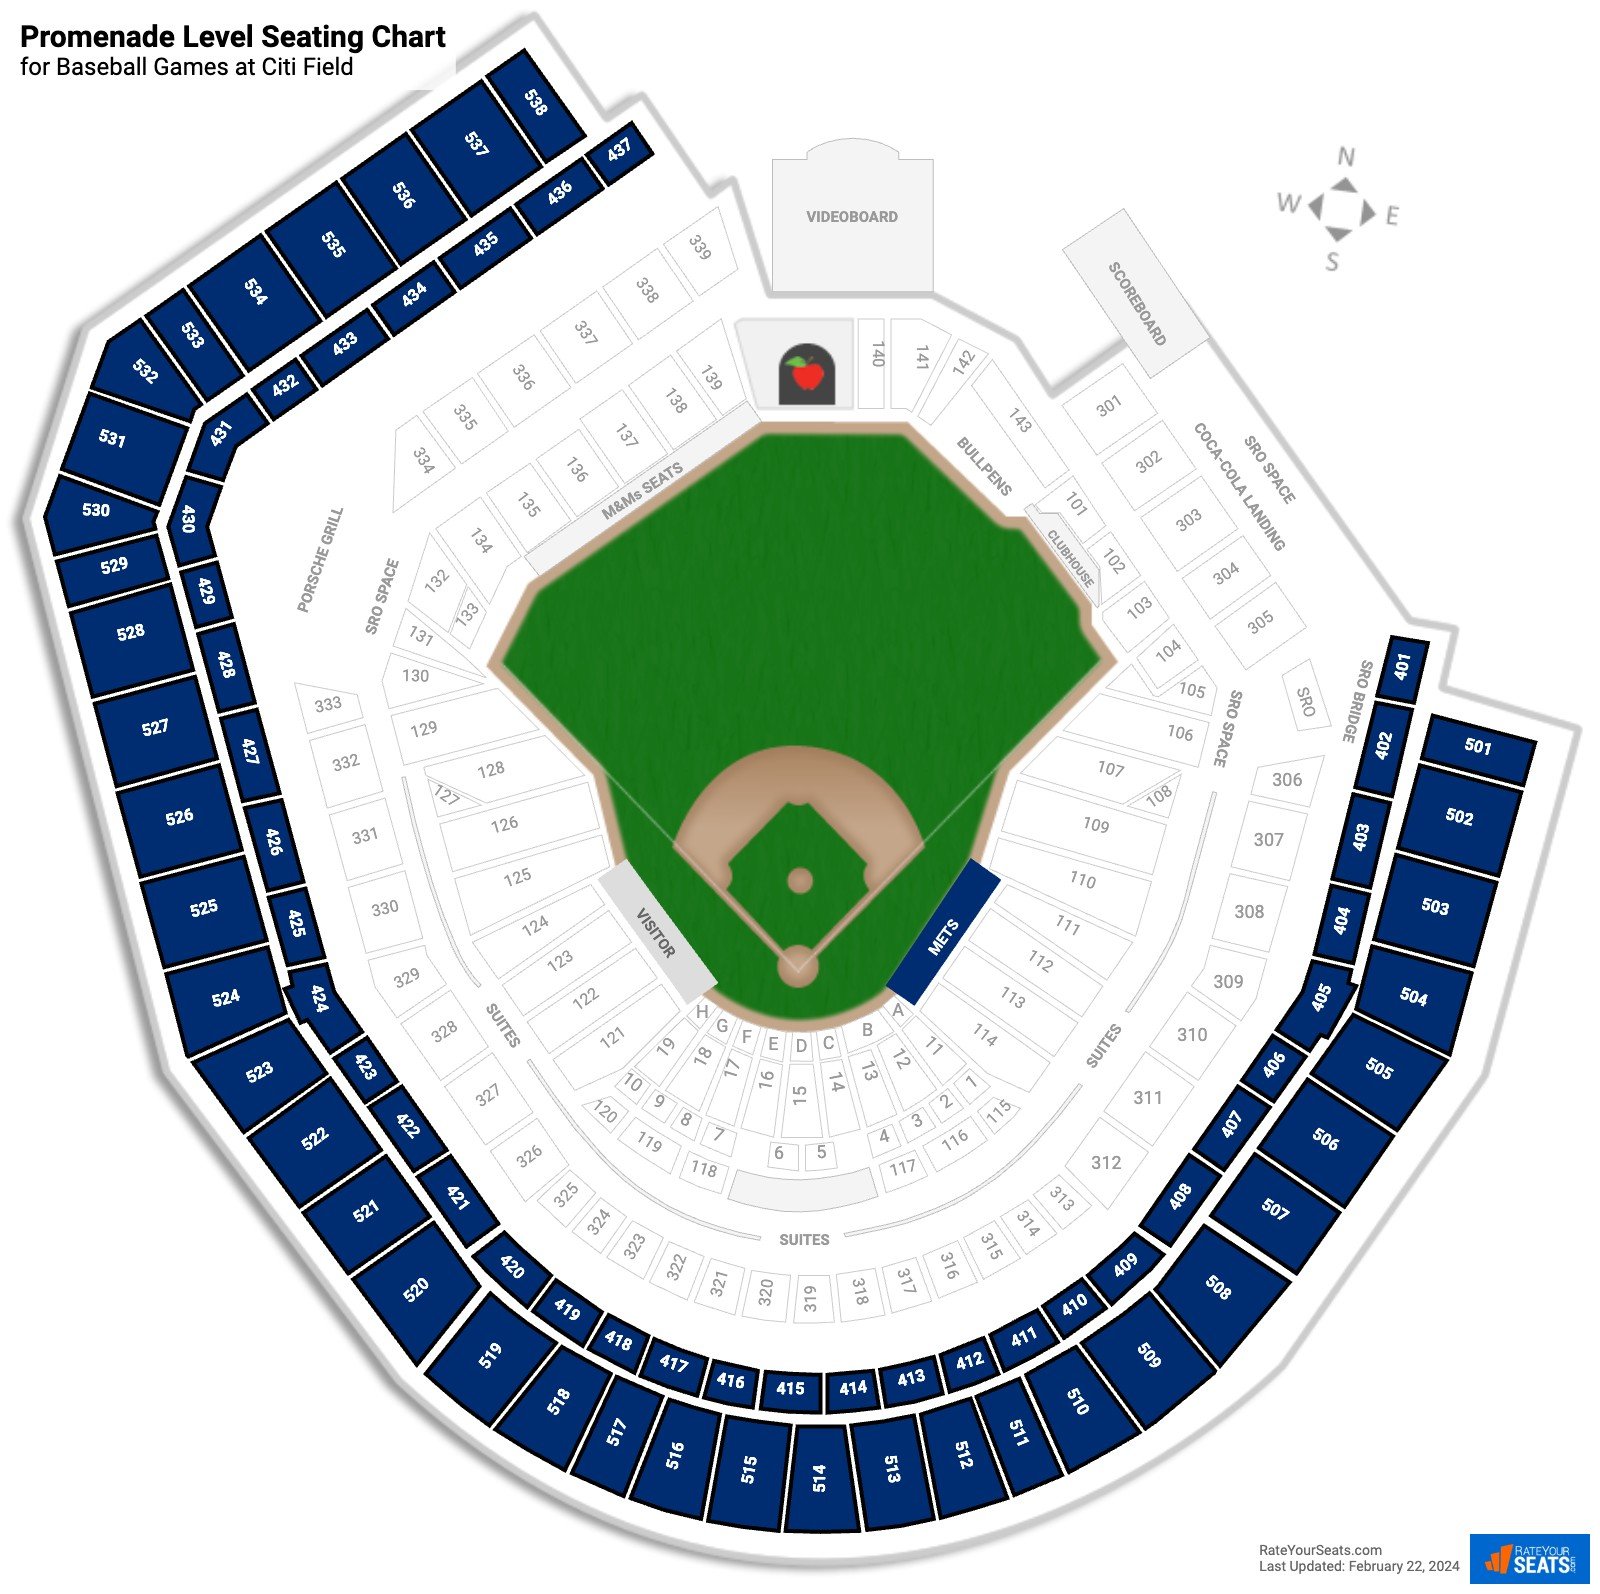 Baseball Promenade Level Seating Chart at Citi Field